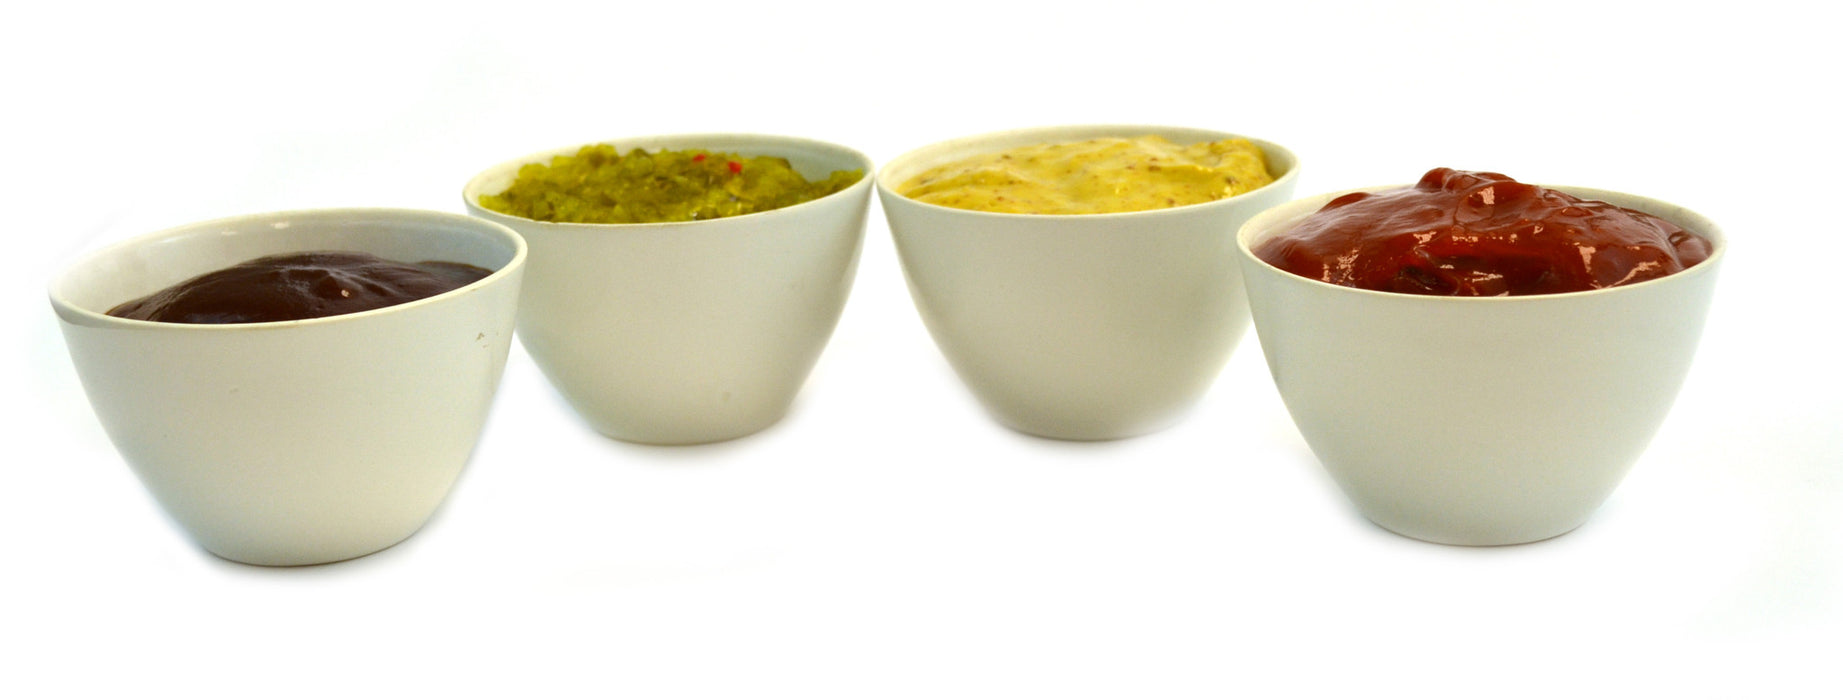 4 Piece Condiment Sauce Dip Bowl Servers with Lids - Hold approx 5 oz Each - Porcelain